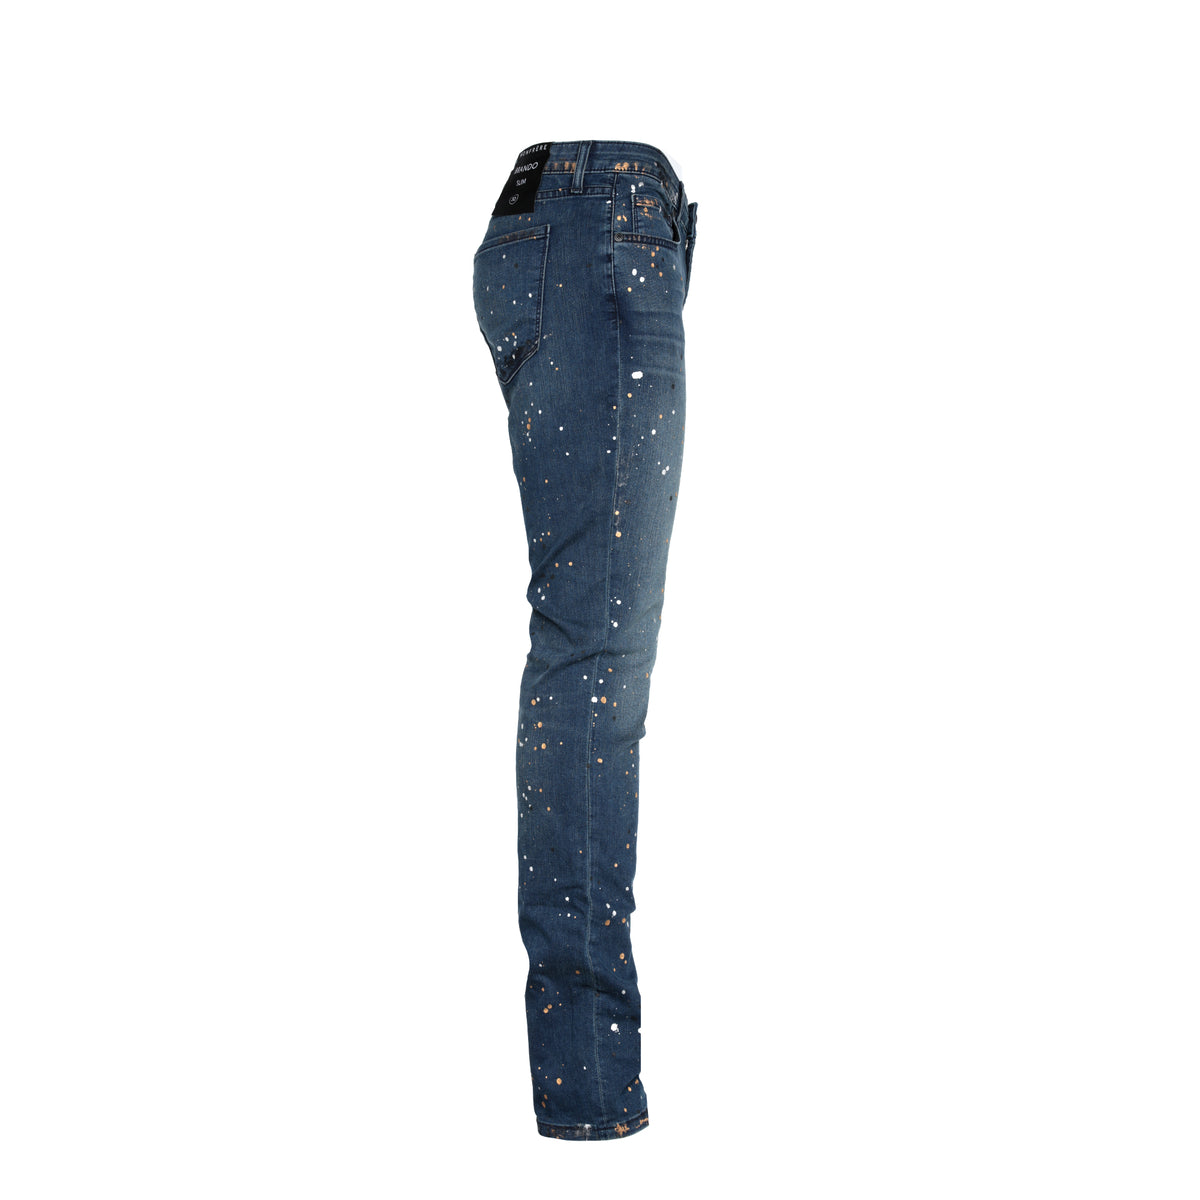 Monfrere Brando Soho Men's Skinny Jeans - SIZE Boutique